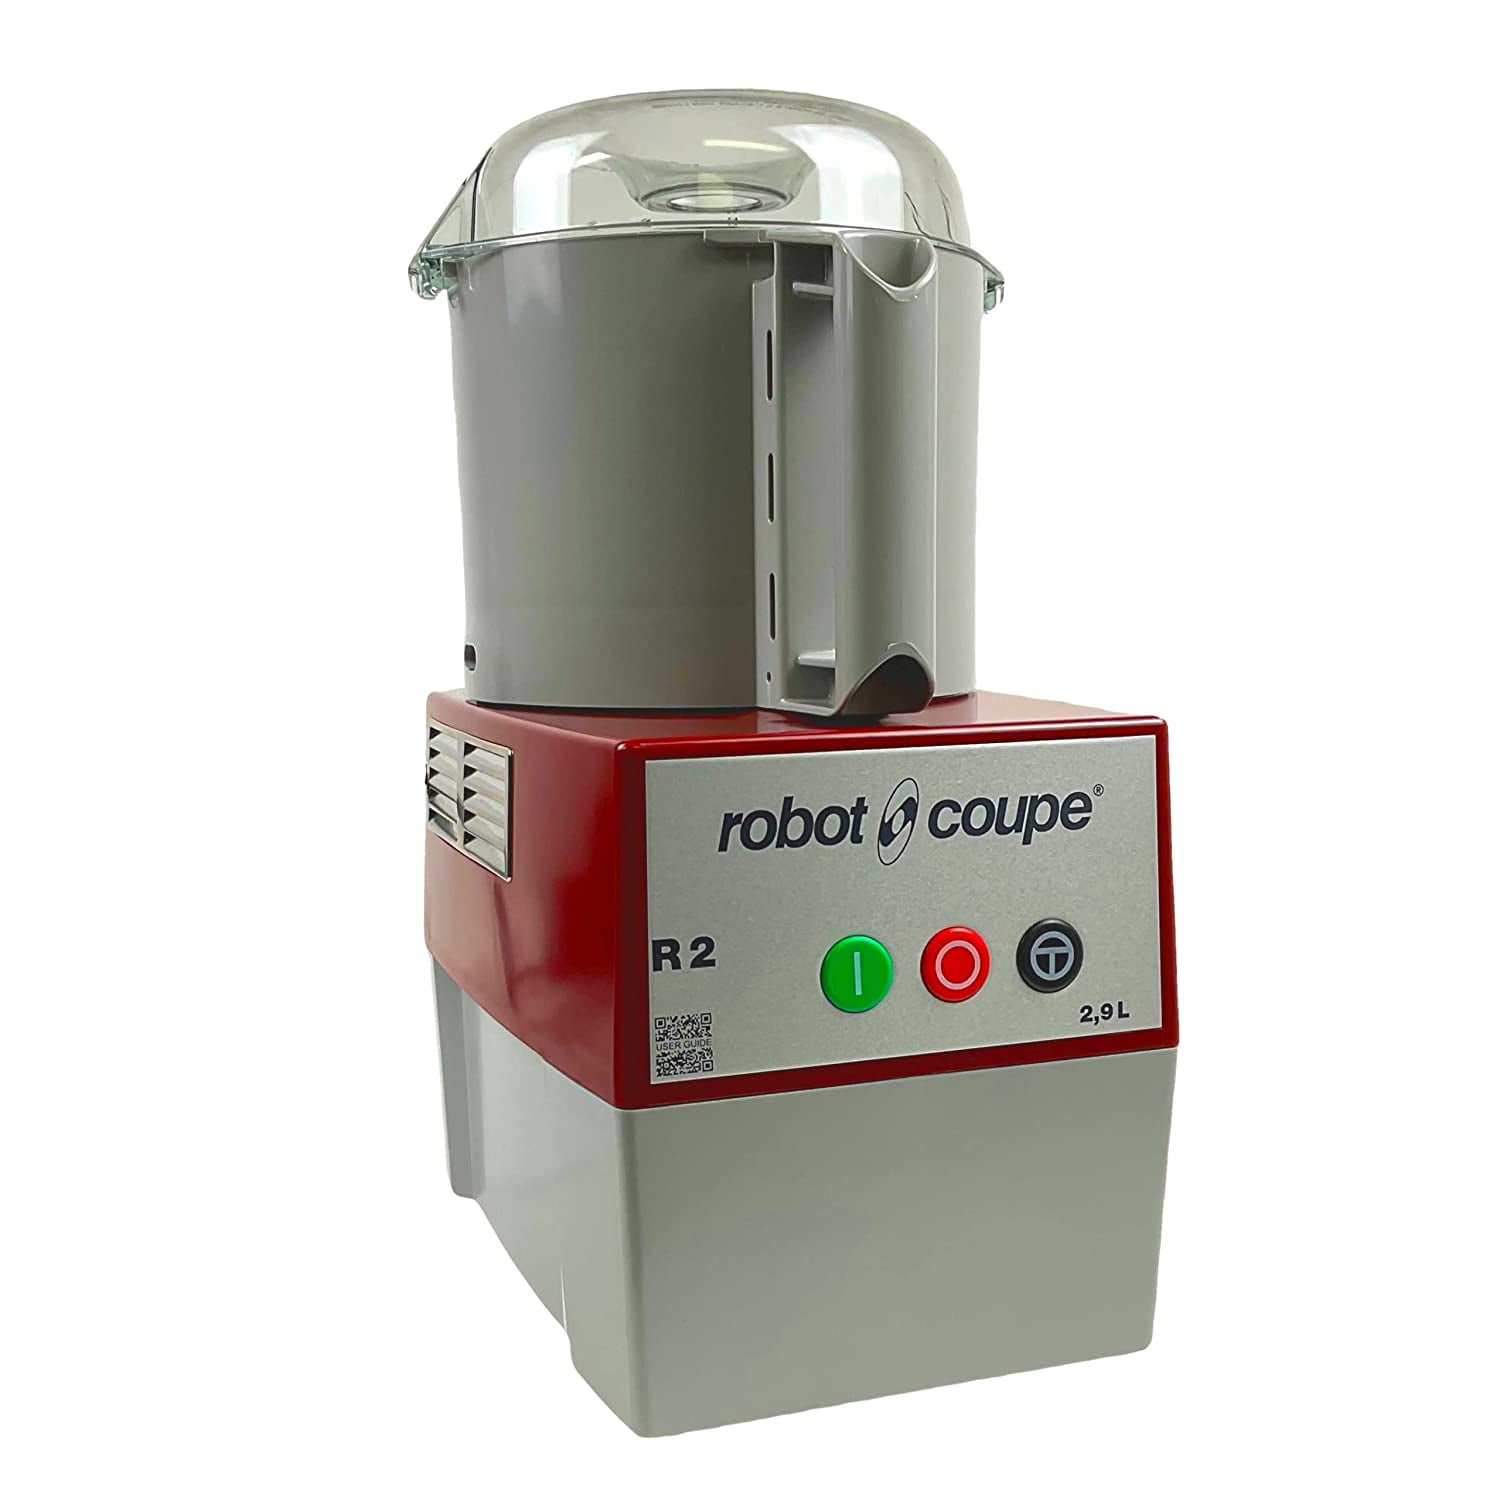 Robot Coupe R2B Processor Cutter/Mixer, 3-Quart Batch Bowl, Polycarbonate, 1 HP, 120v, Gray, Red, and Clear - Walmart.com